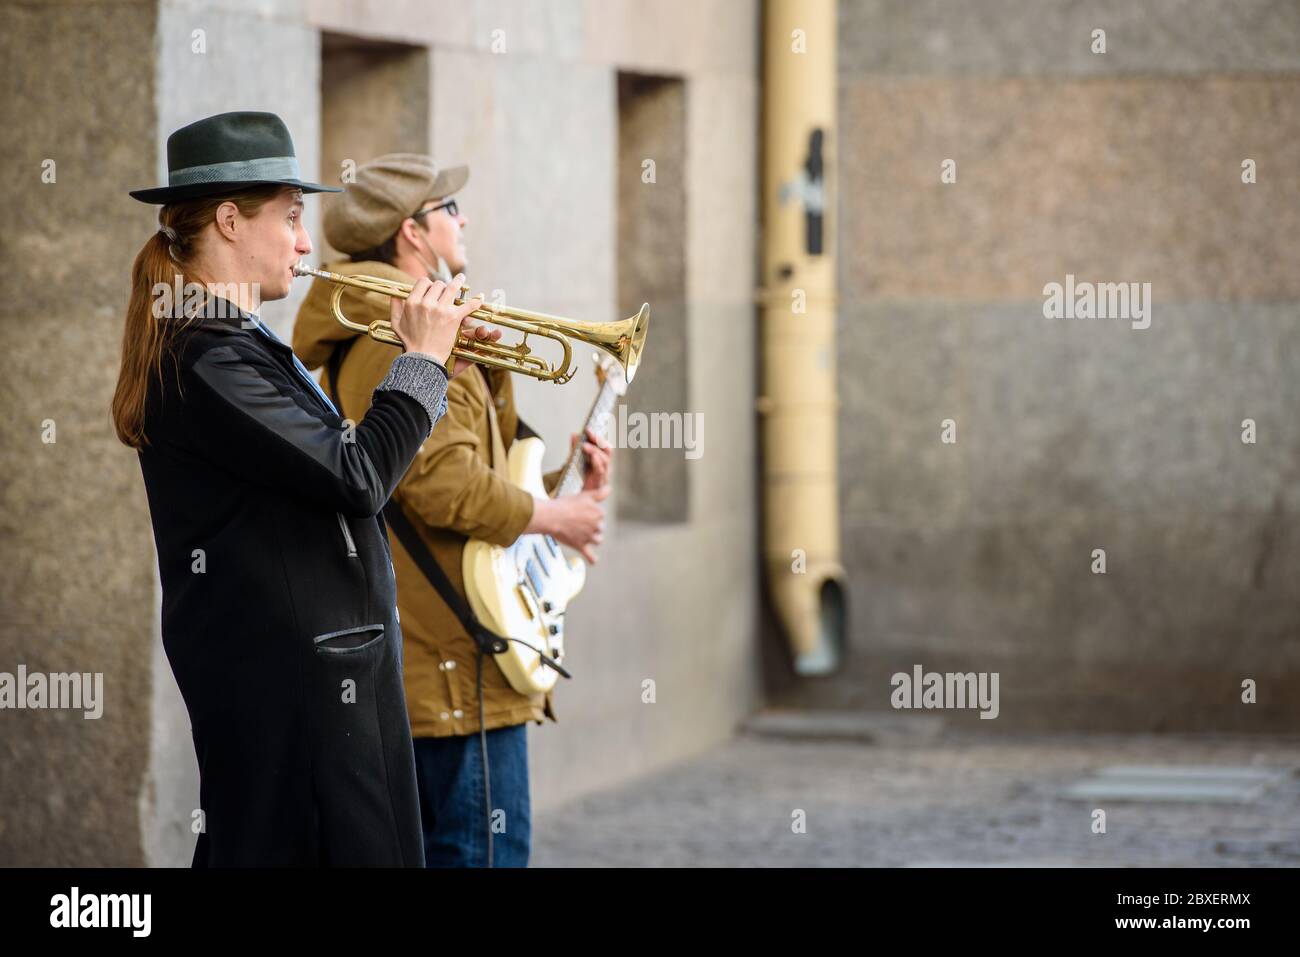 Russia, Saint Petersburg, may 23, 2020: street musicians in Saint Petersburg Stock Photo